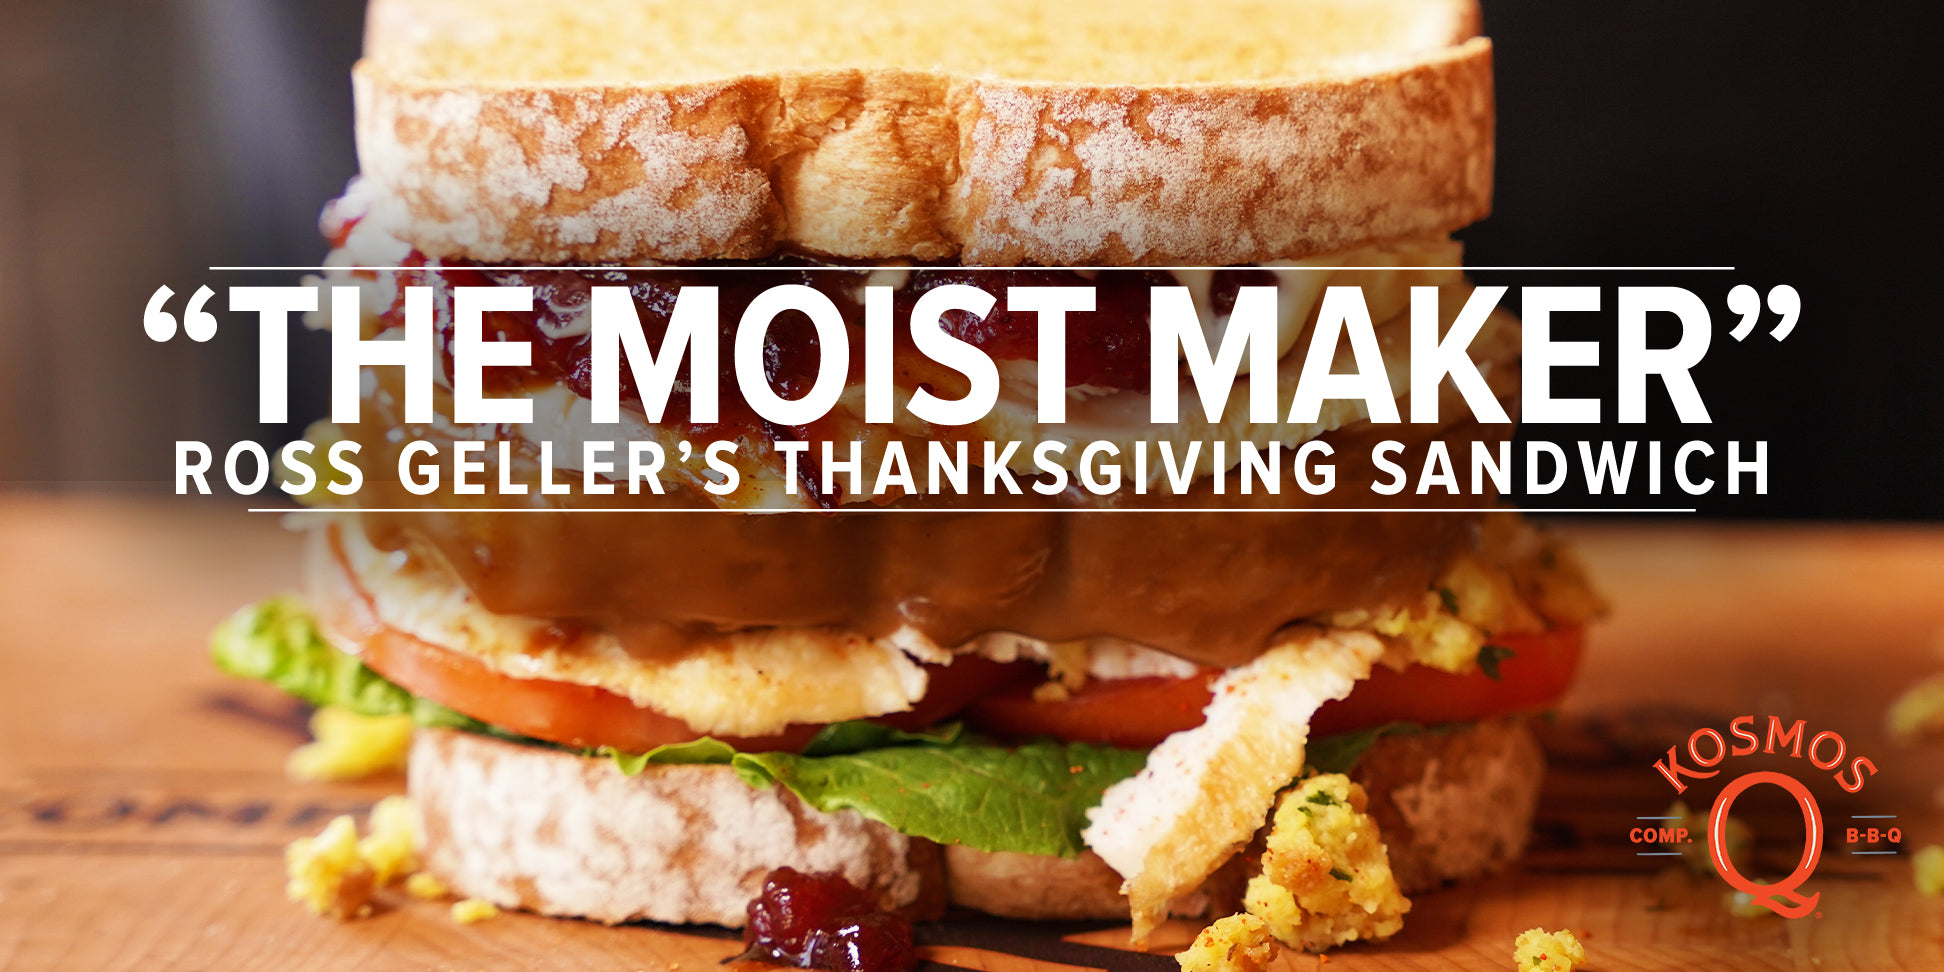 The Moist Maker: Ross Geller's Thanksgiving Sandwich